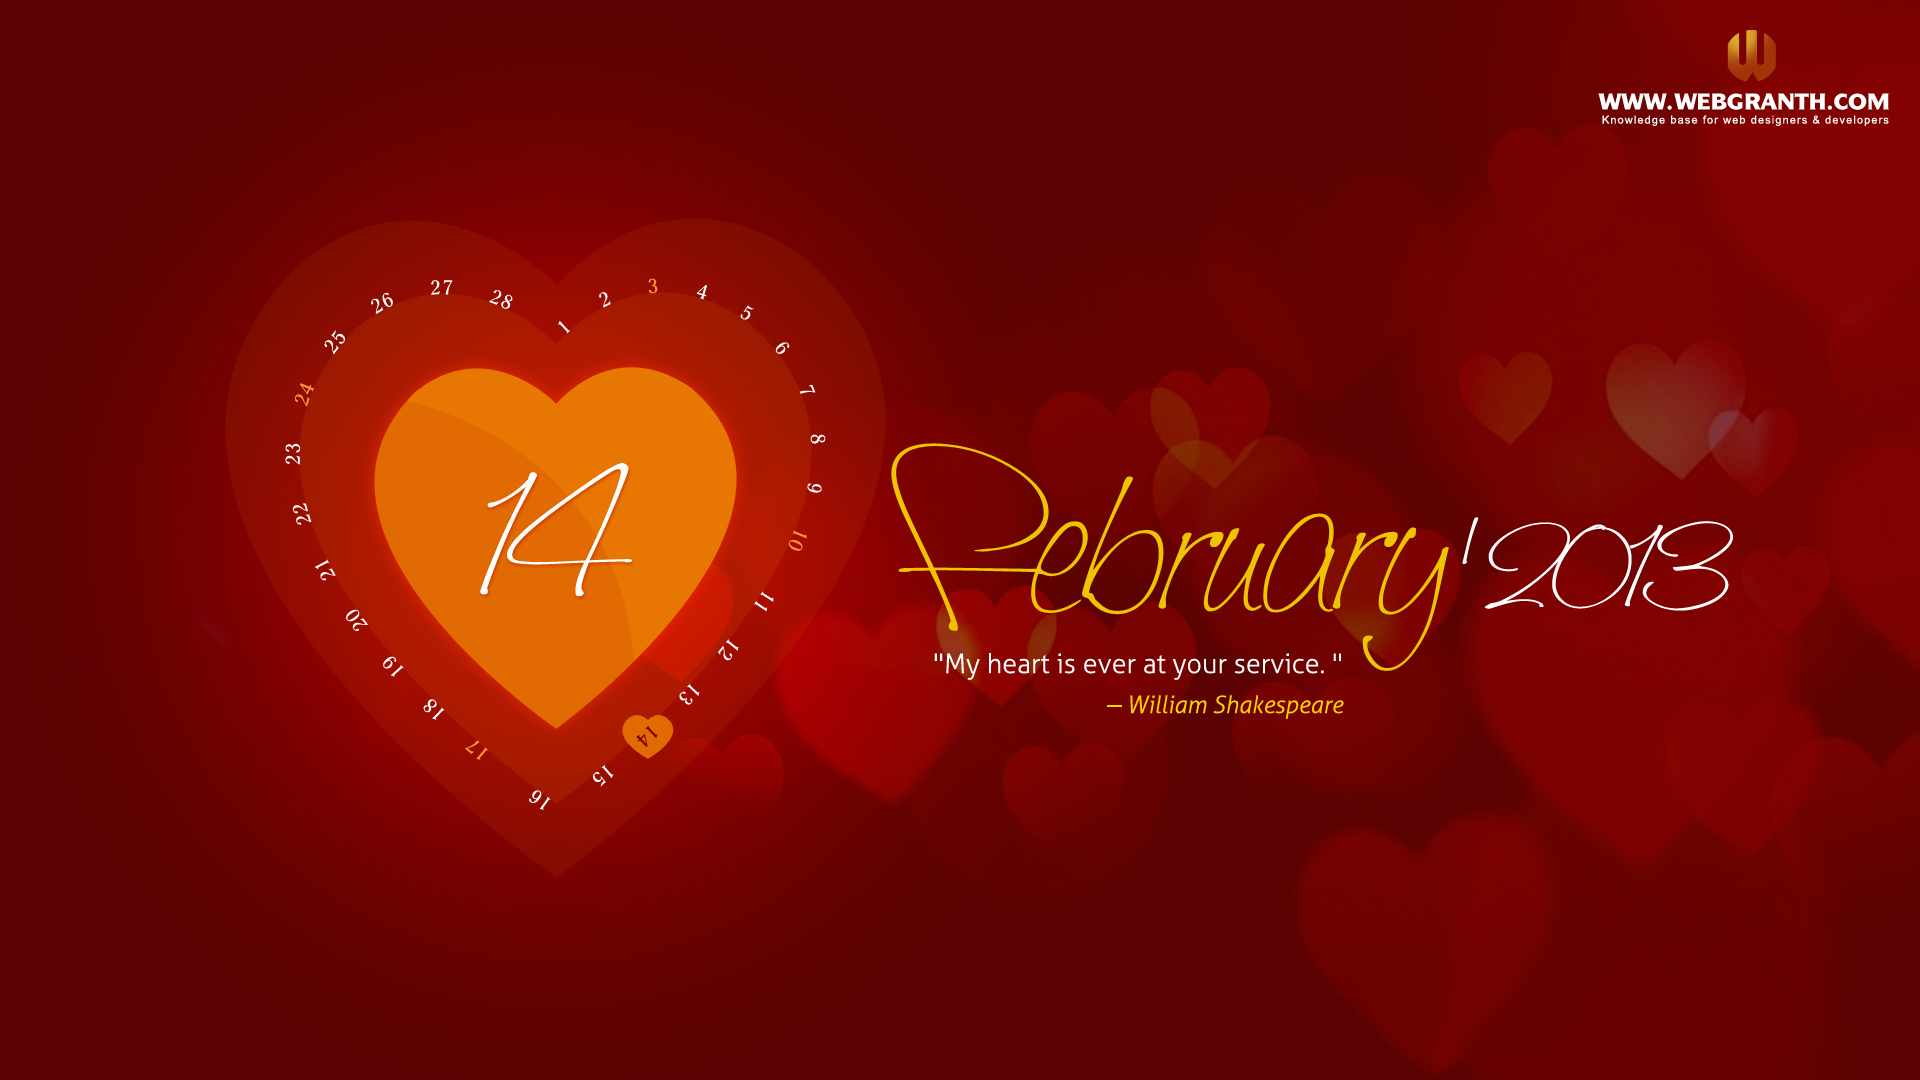 HD Valentine Calendar Wallpaper February 2013 ..: View HD Image of ...